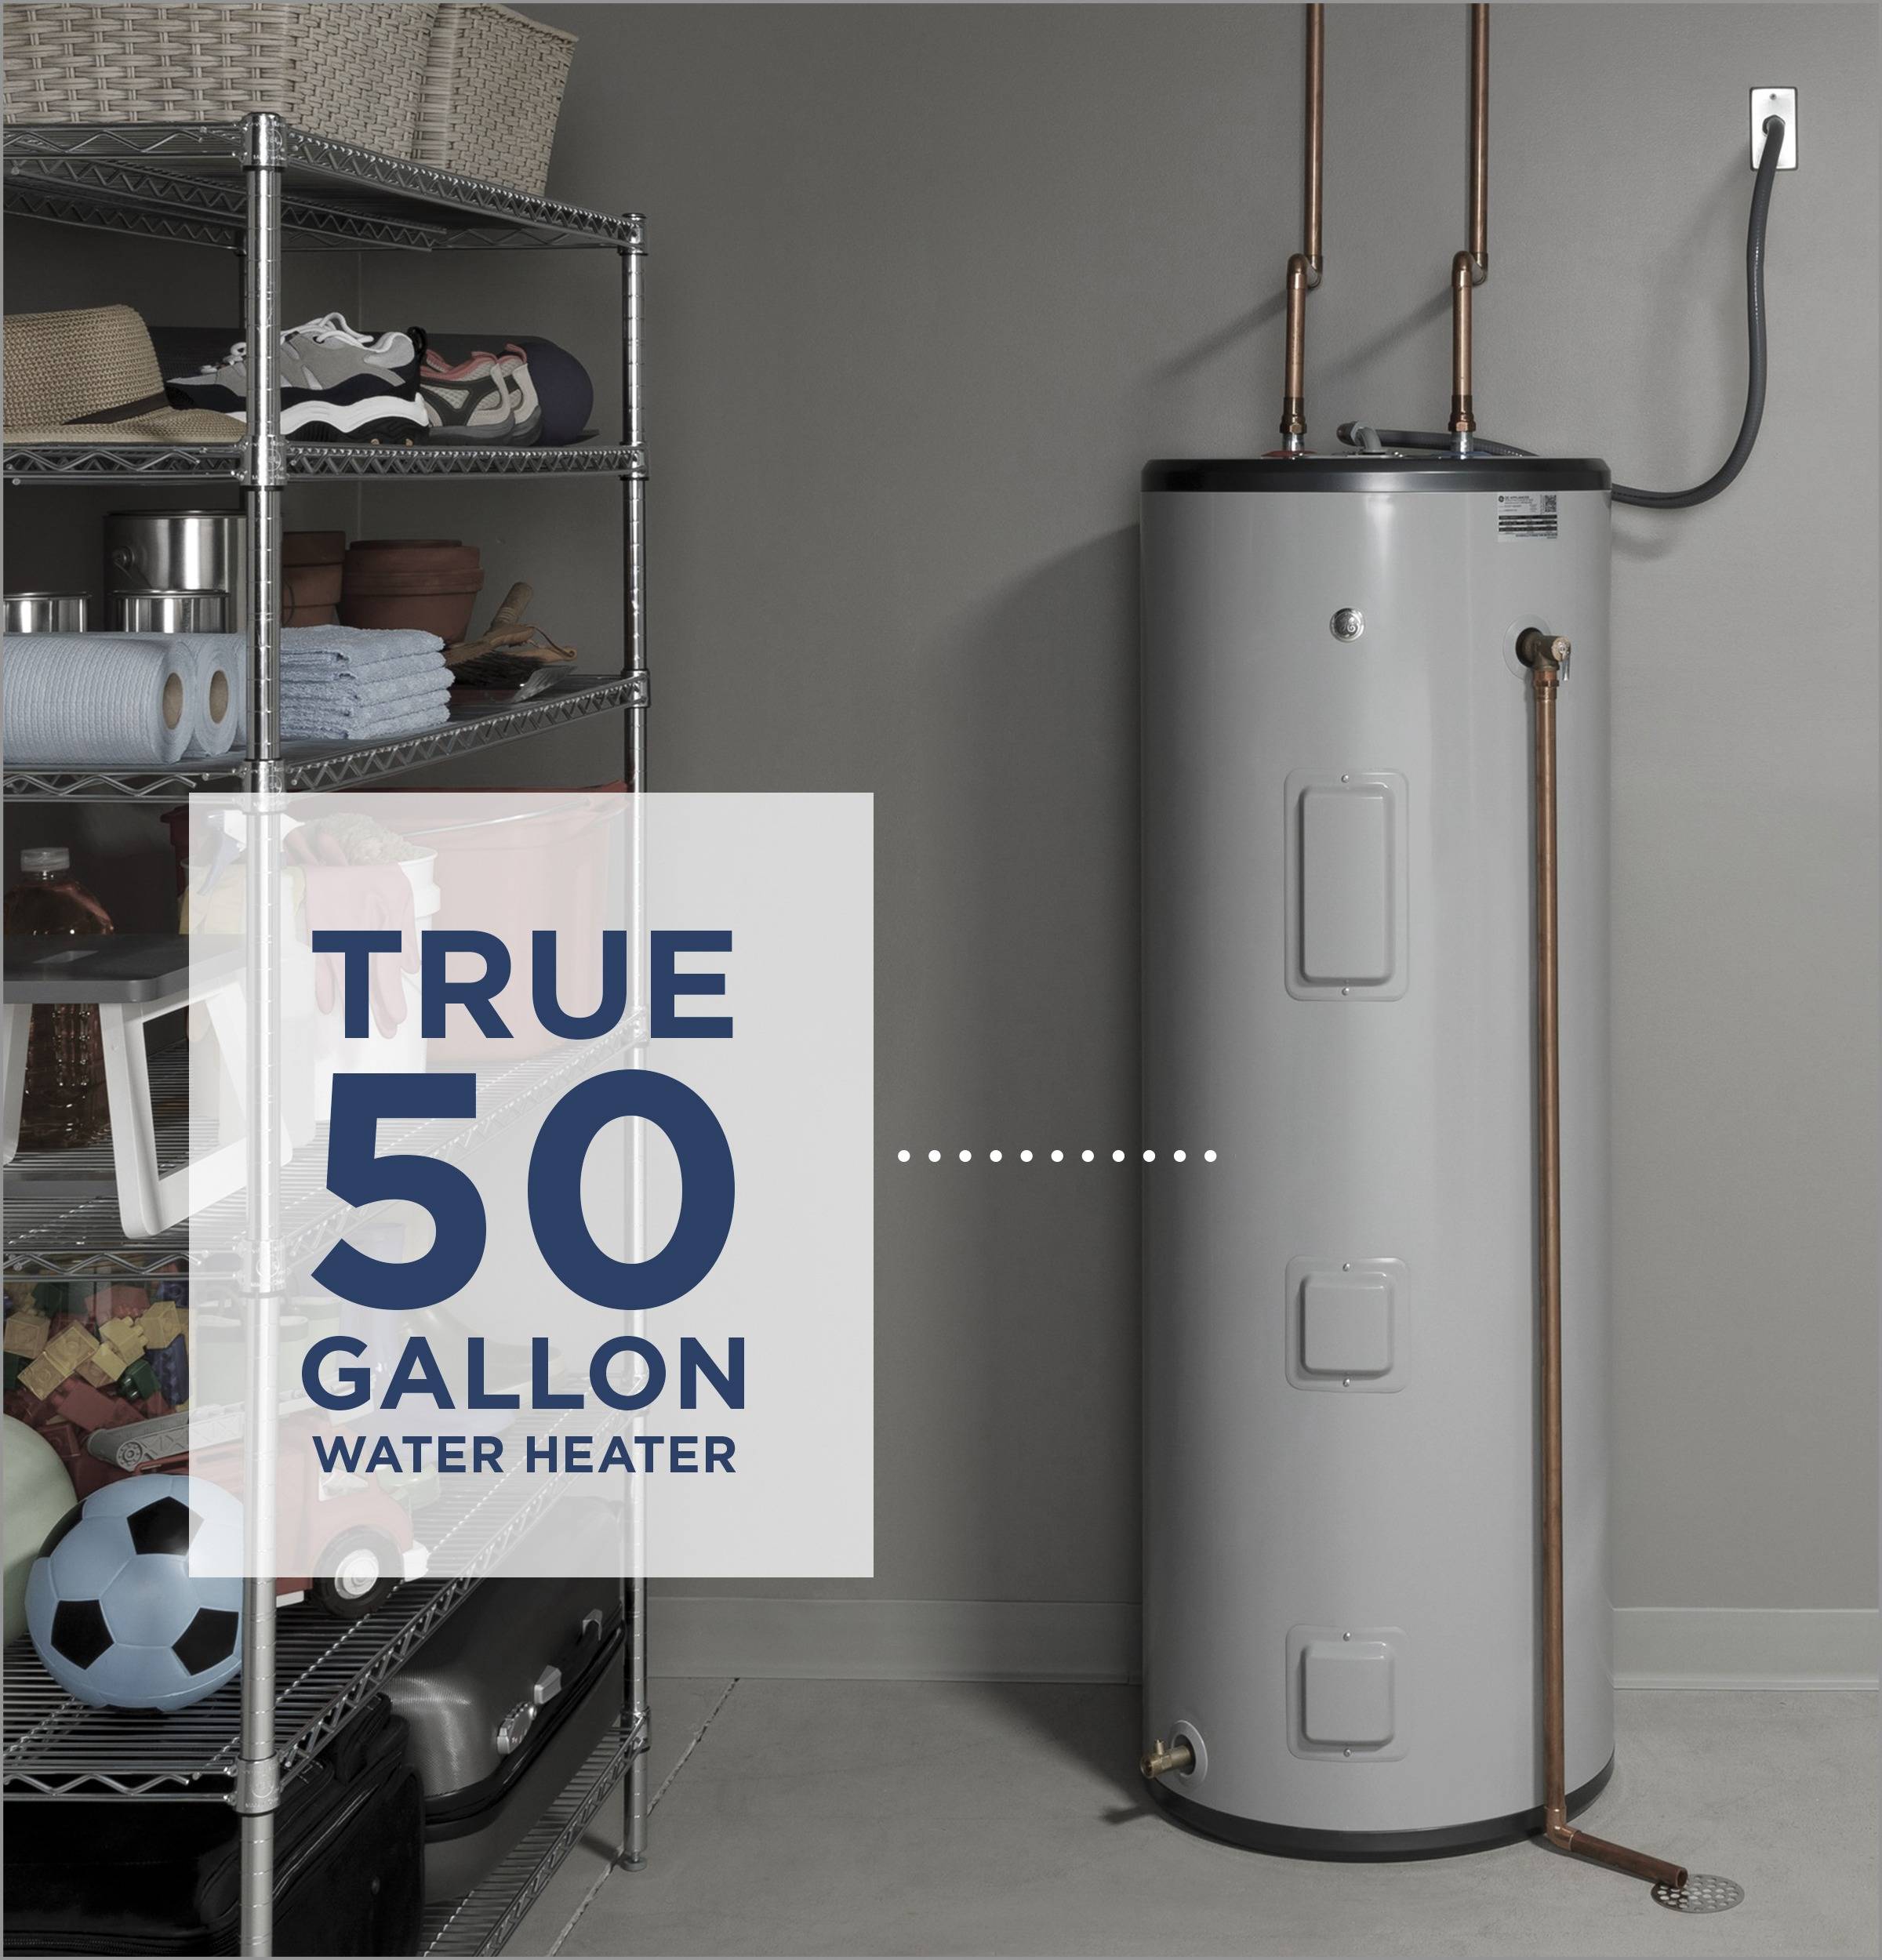 Hot Water Heater in garage: True 50 Gallon Water Heater